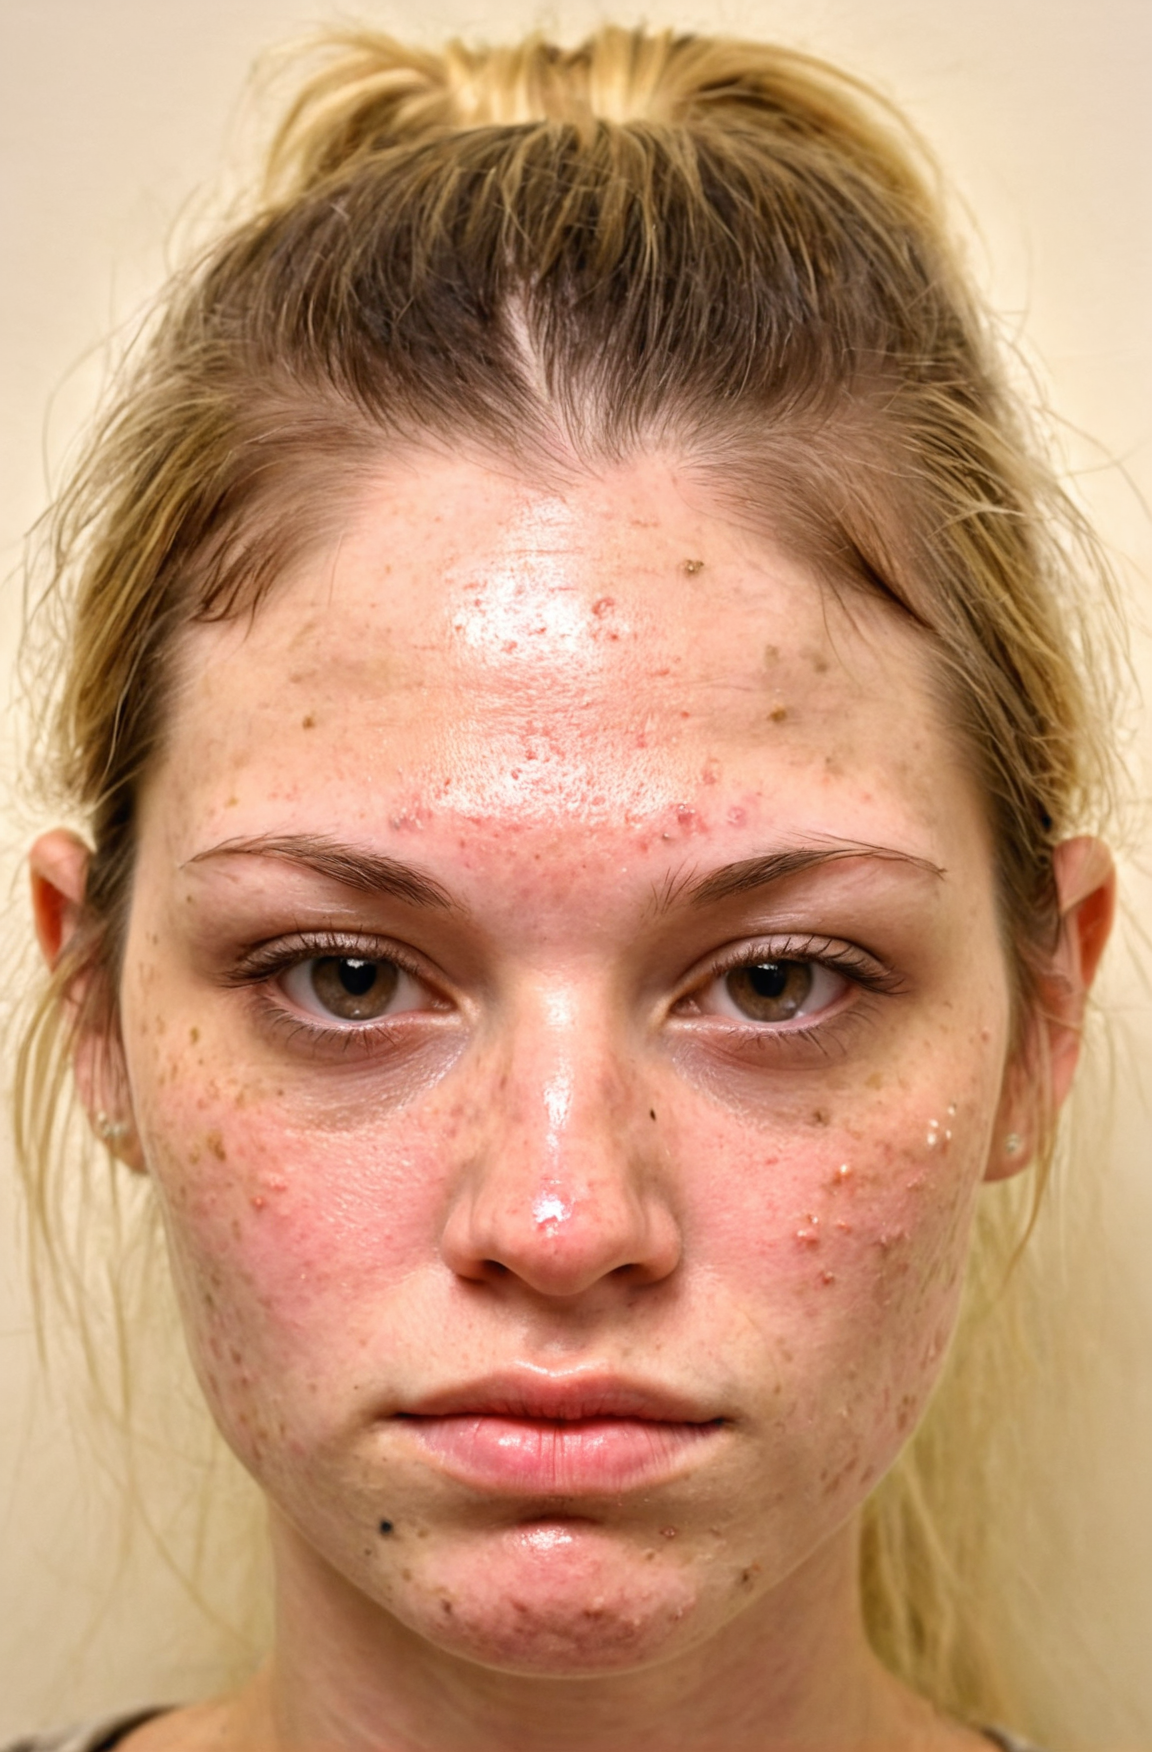 Mugshot of a female Drug Addict, Dirty Skin Details, Dirty Face, Acne, Ugly